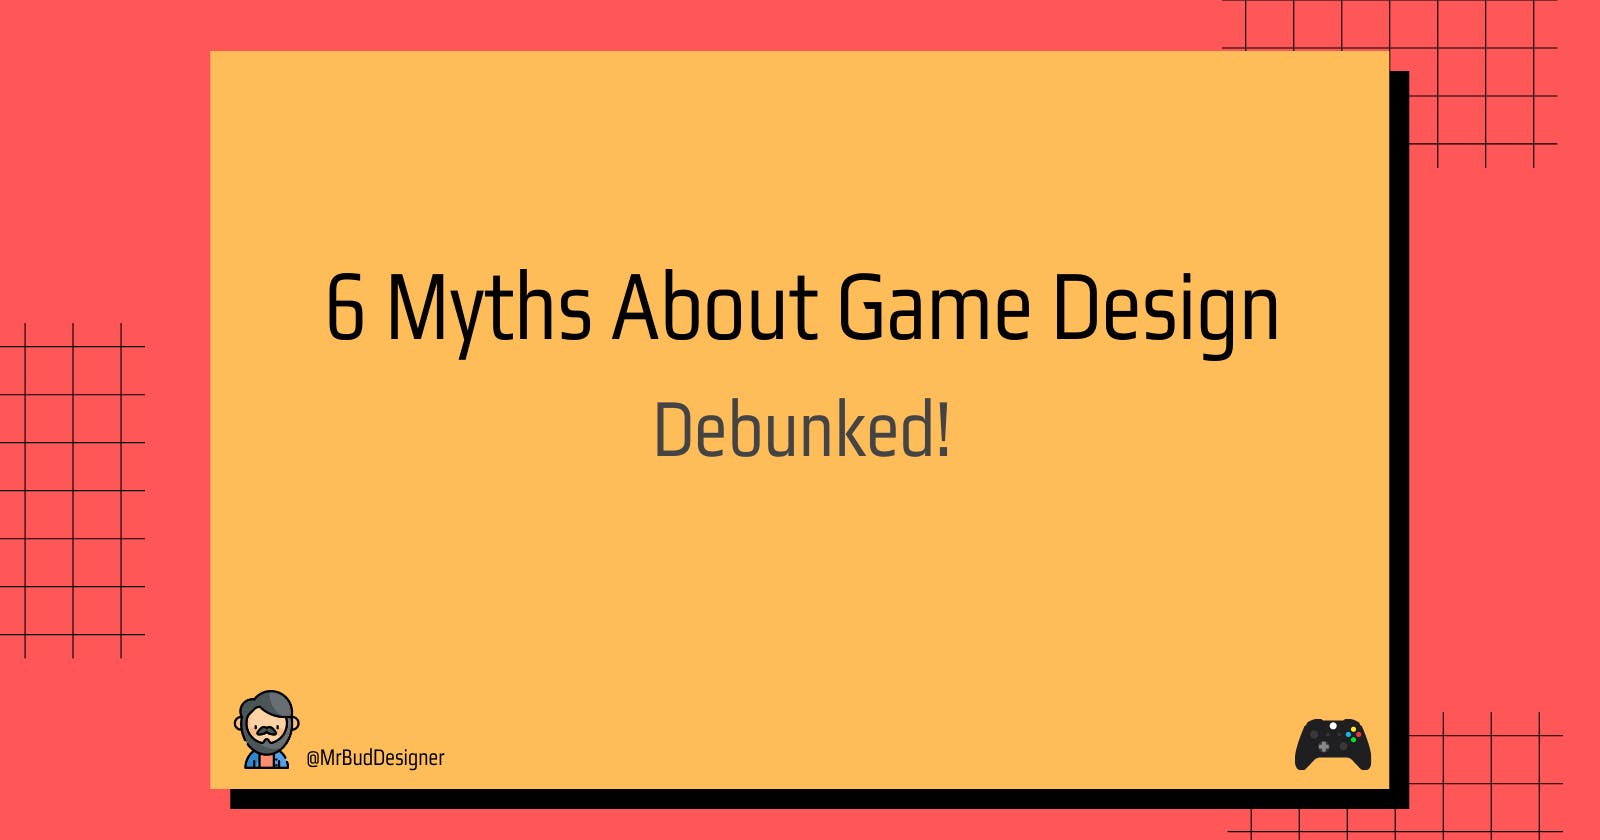 6 Myths About Game Design, Debunked!